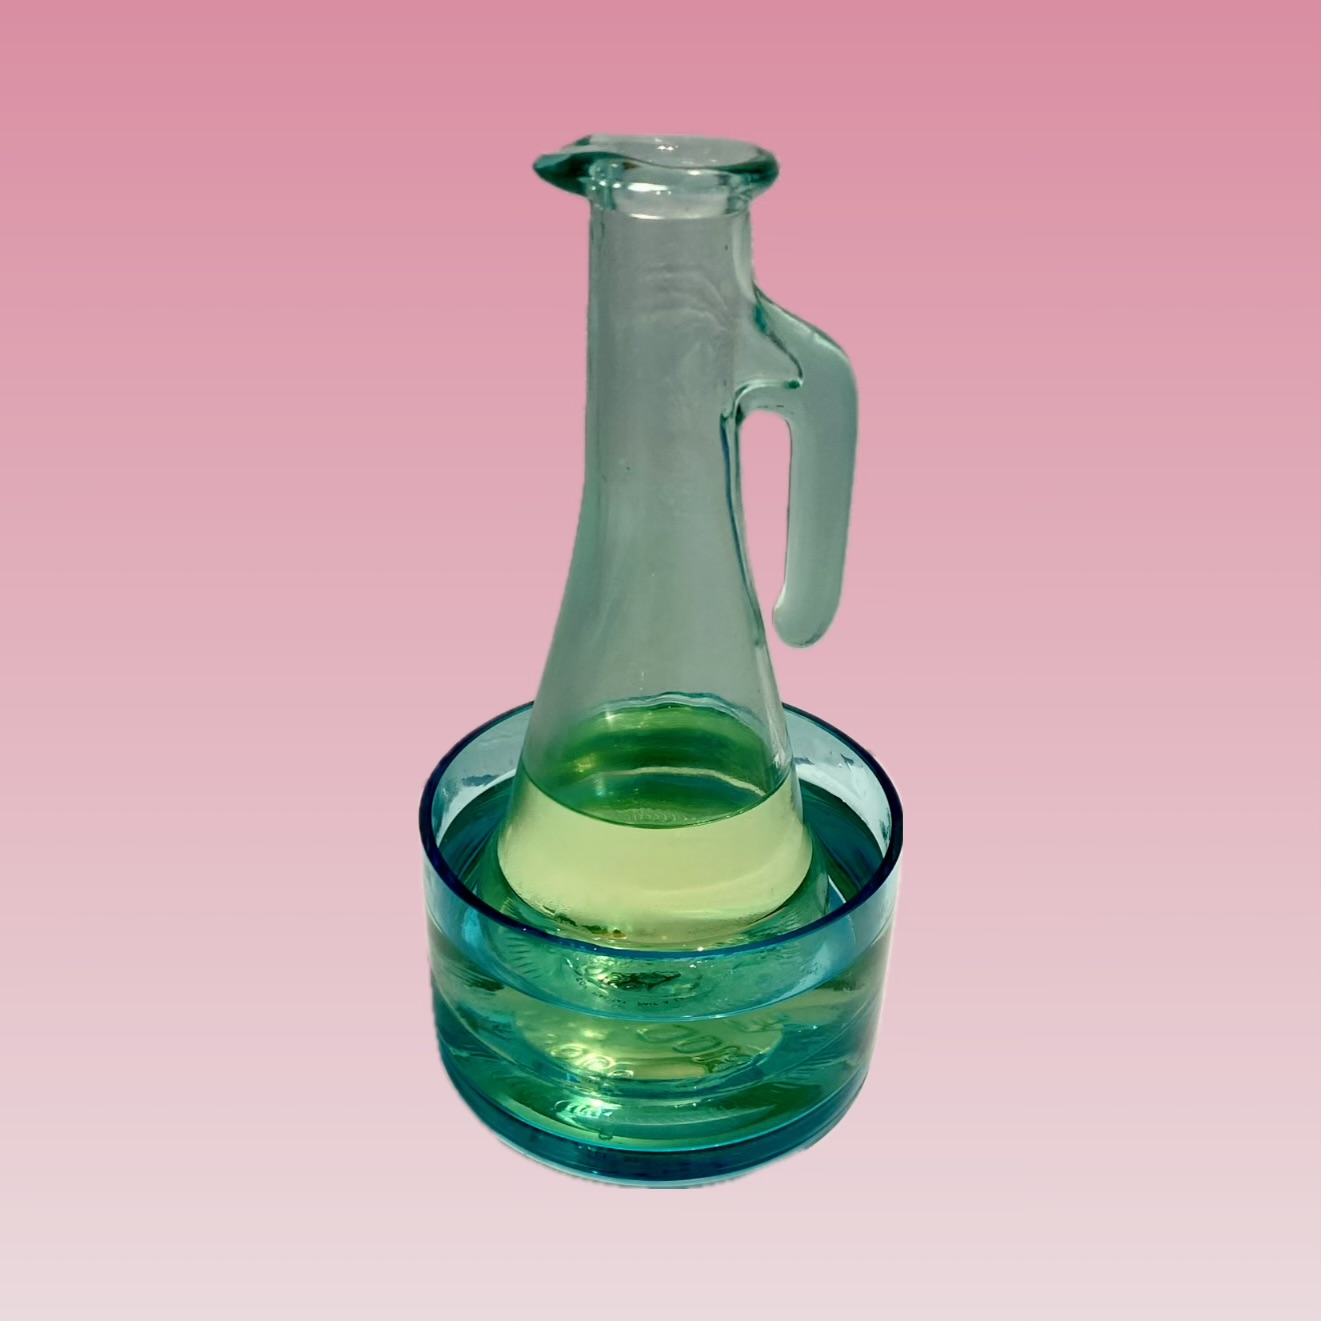 Fragrant massage oil warmed in a glass jug